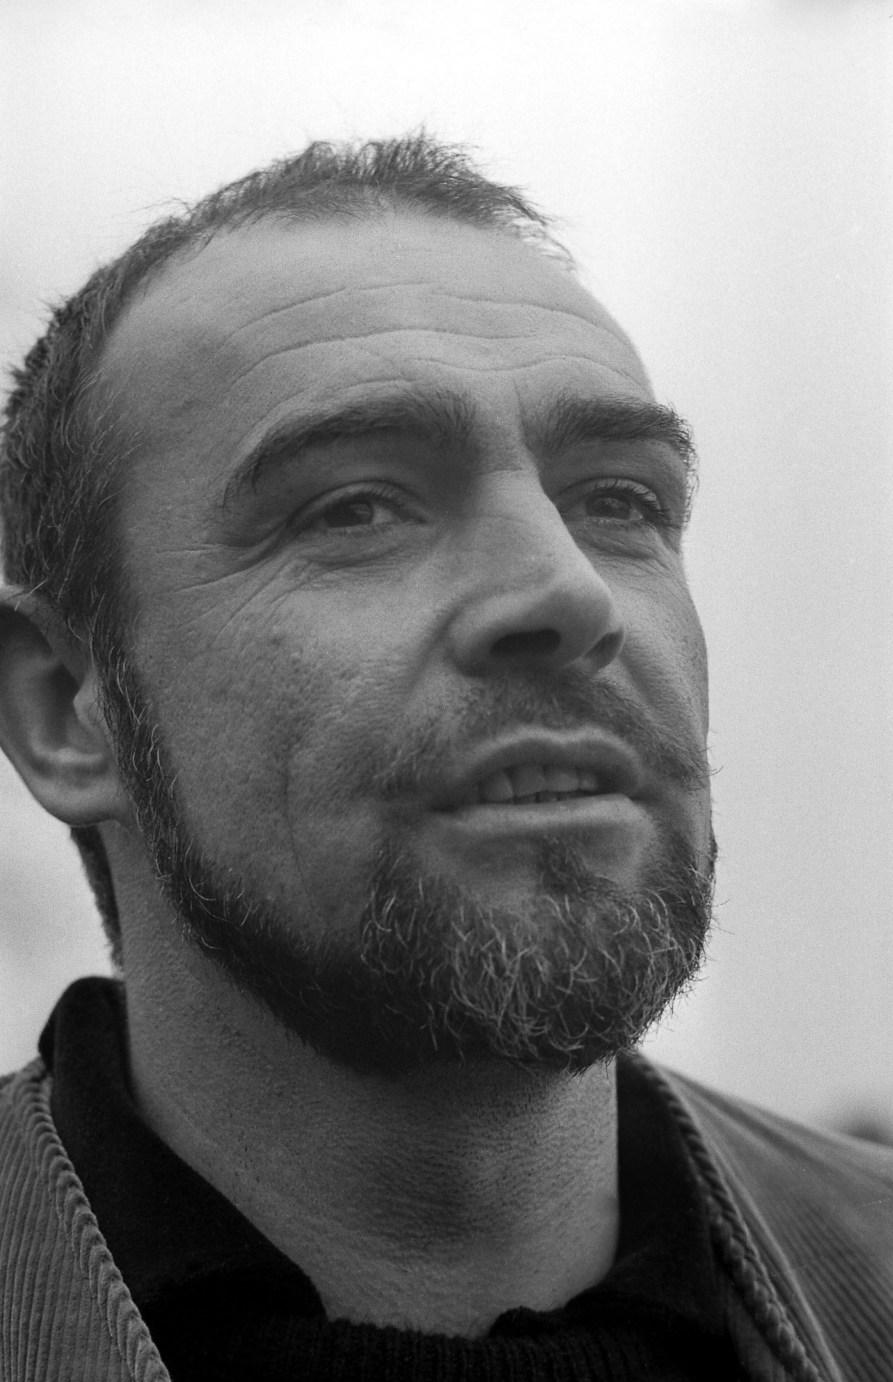 Photo №1542 Sean Connery.